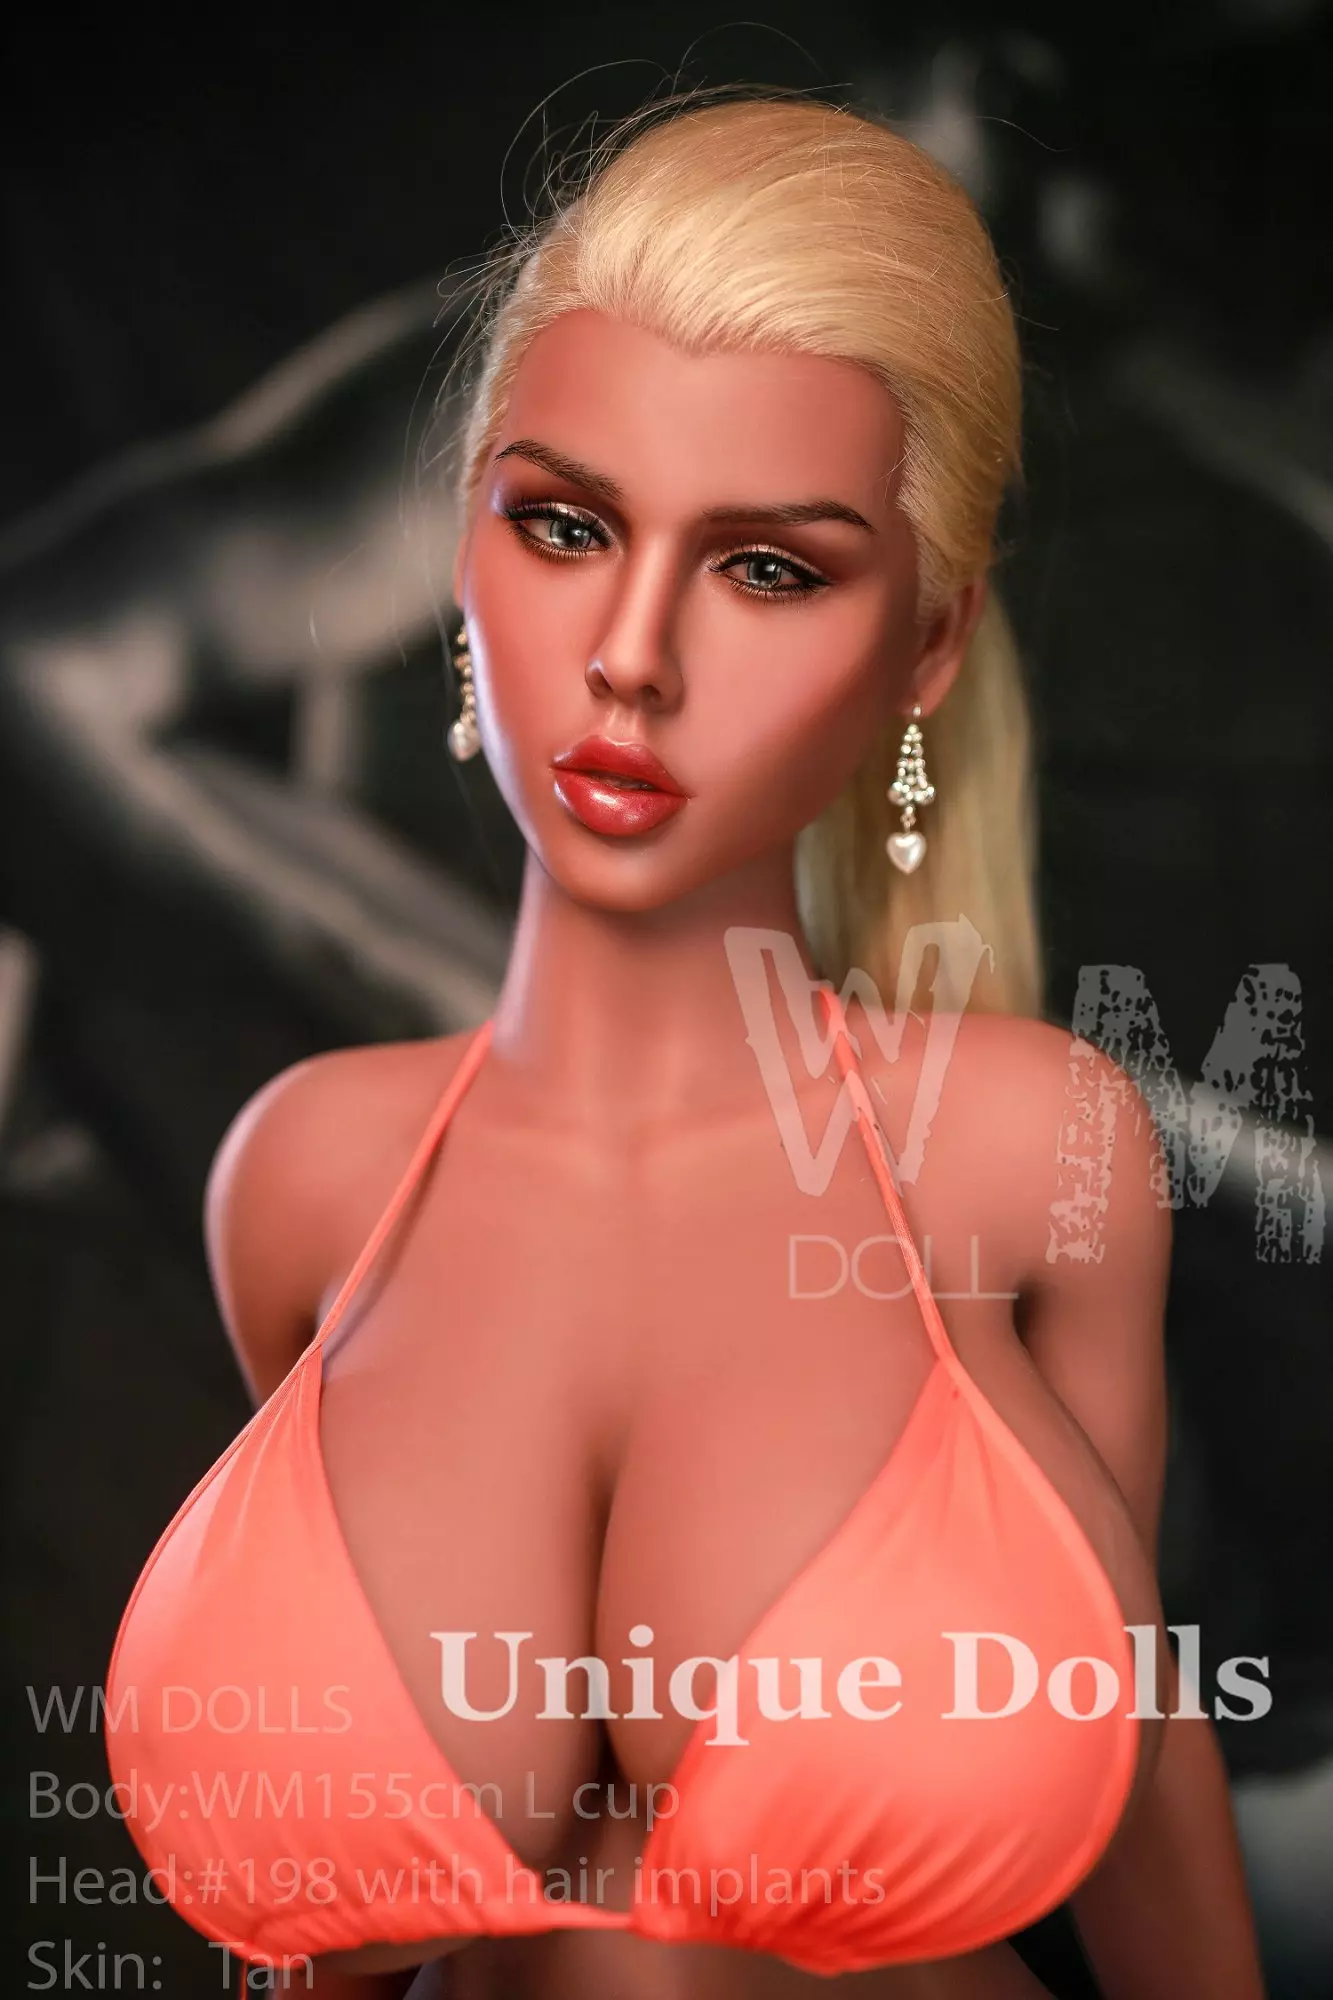 WM Doll 155cm Nancy with fuckable big boobs